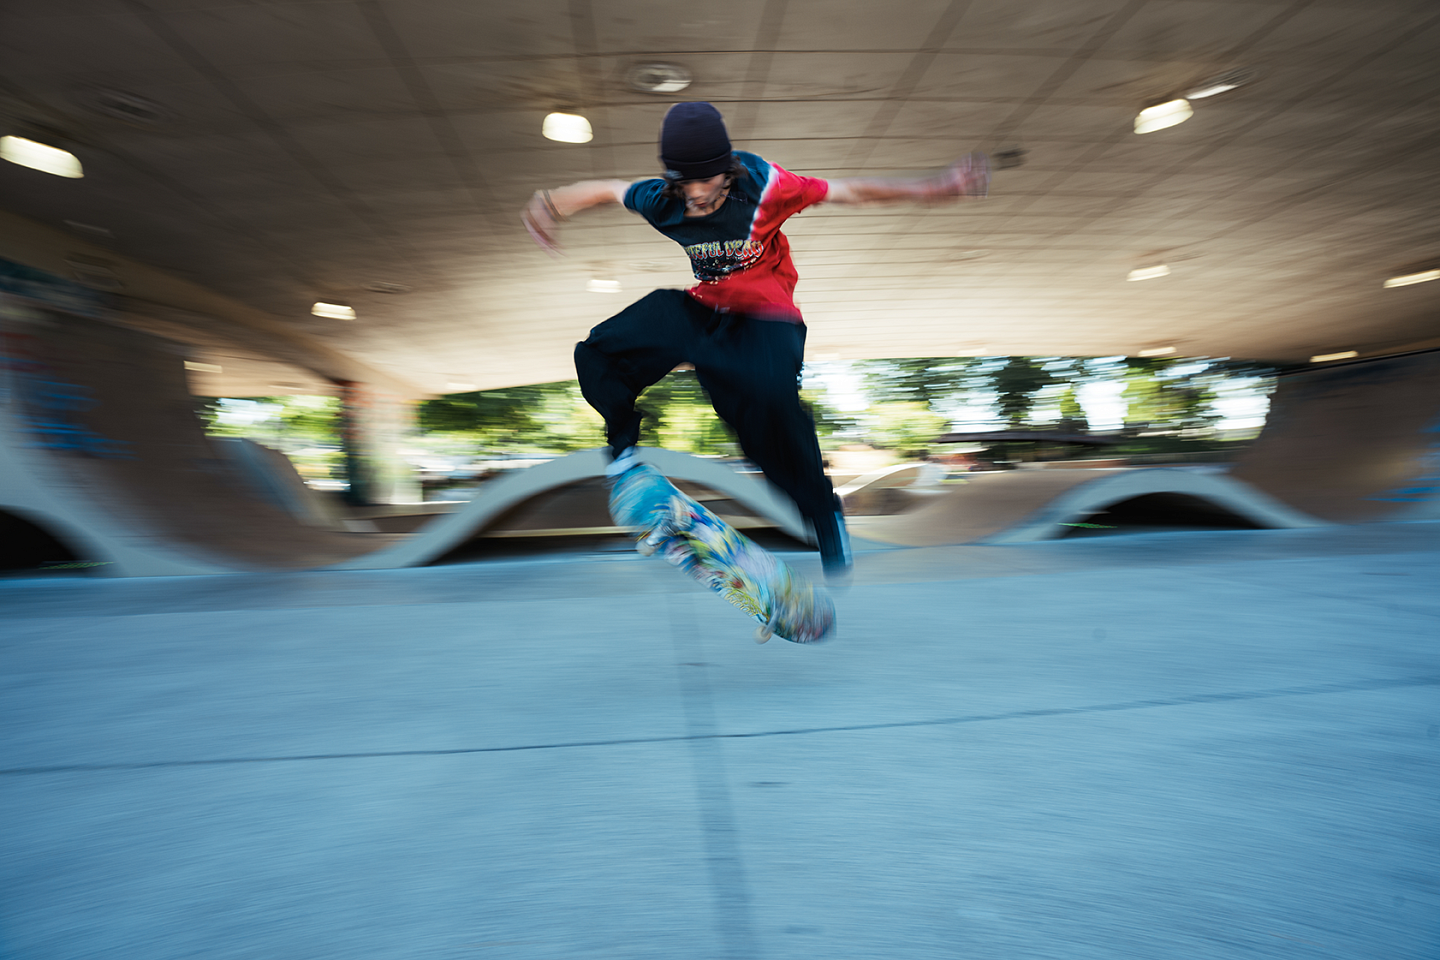 Youth on skateboarding does flip-board trick against urban backdrop